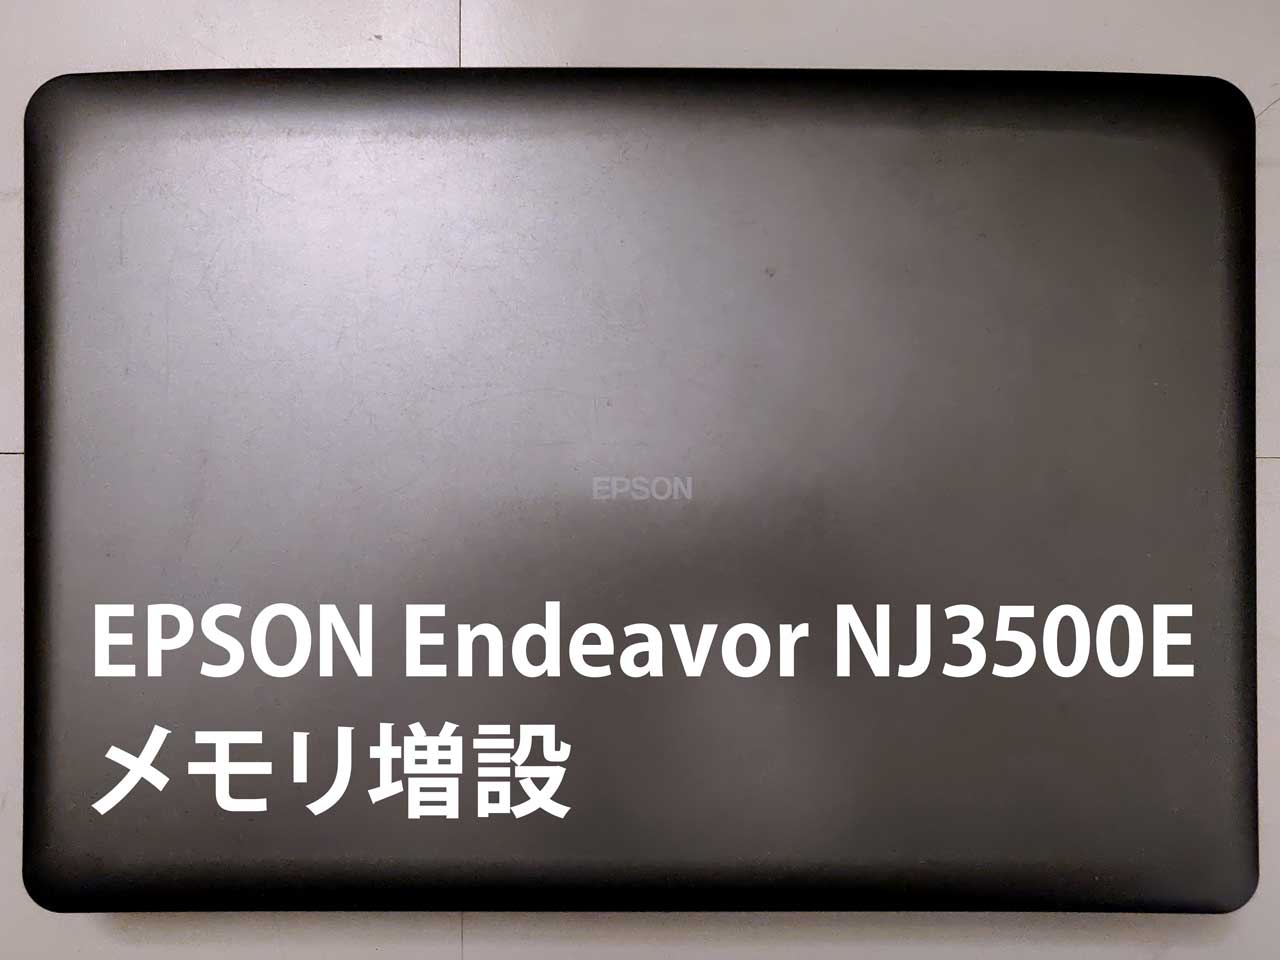 EPSON Endeavor NJ3500E 分解【メモリ増設】 | OneOffObject